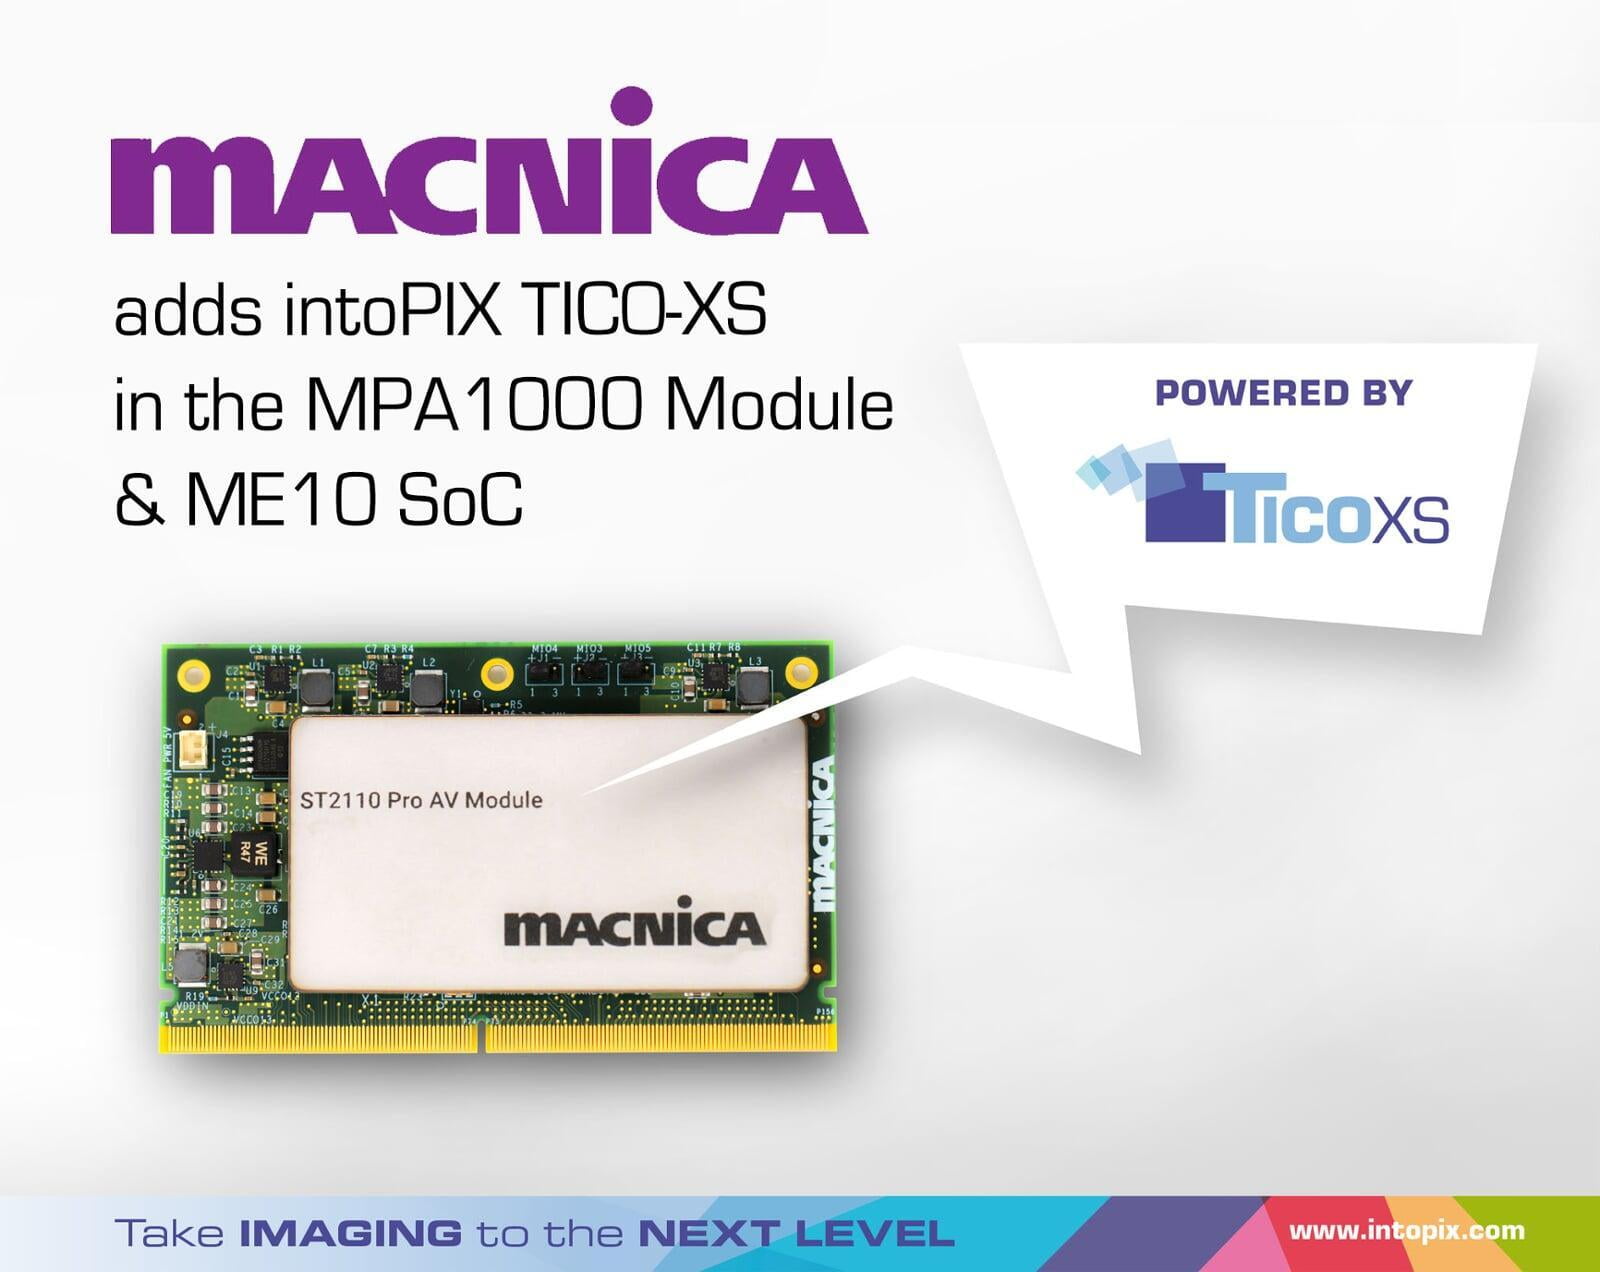 Macnica adopts intoPIX TICO-XS for its 4K ProAV OEM solutions